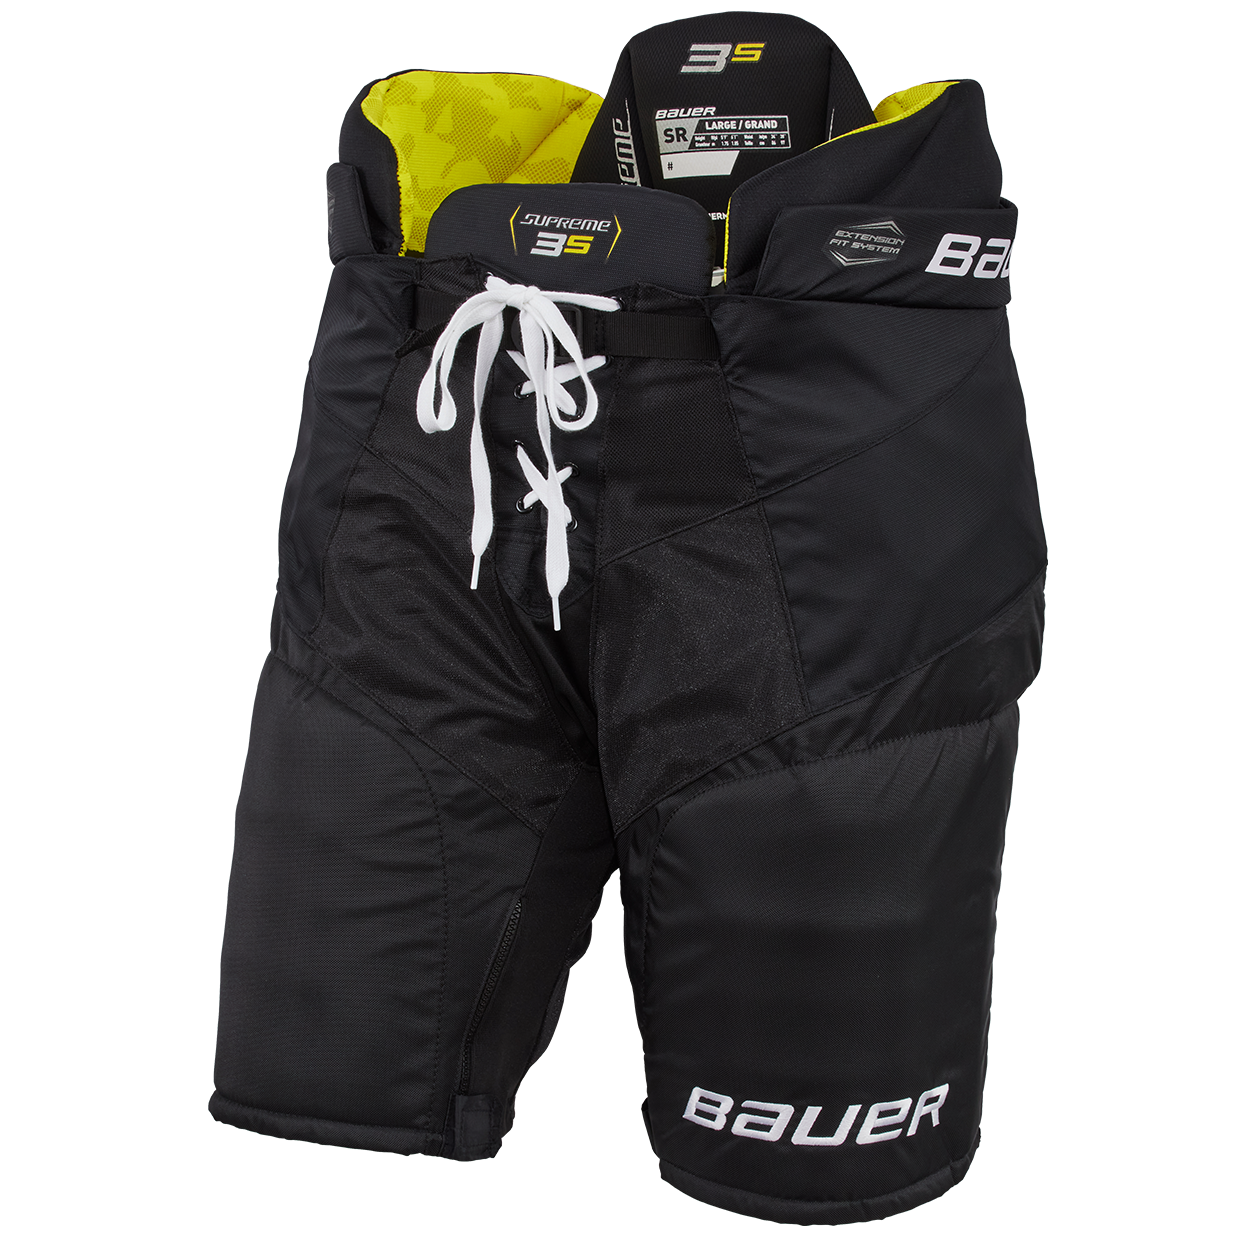 Bauer Supreme 3S Hockey Pants - Intermediate